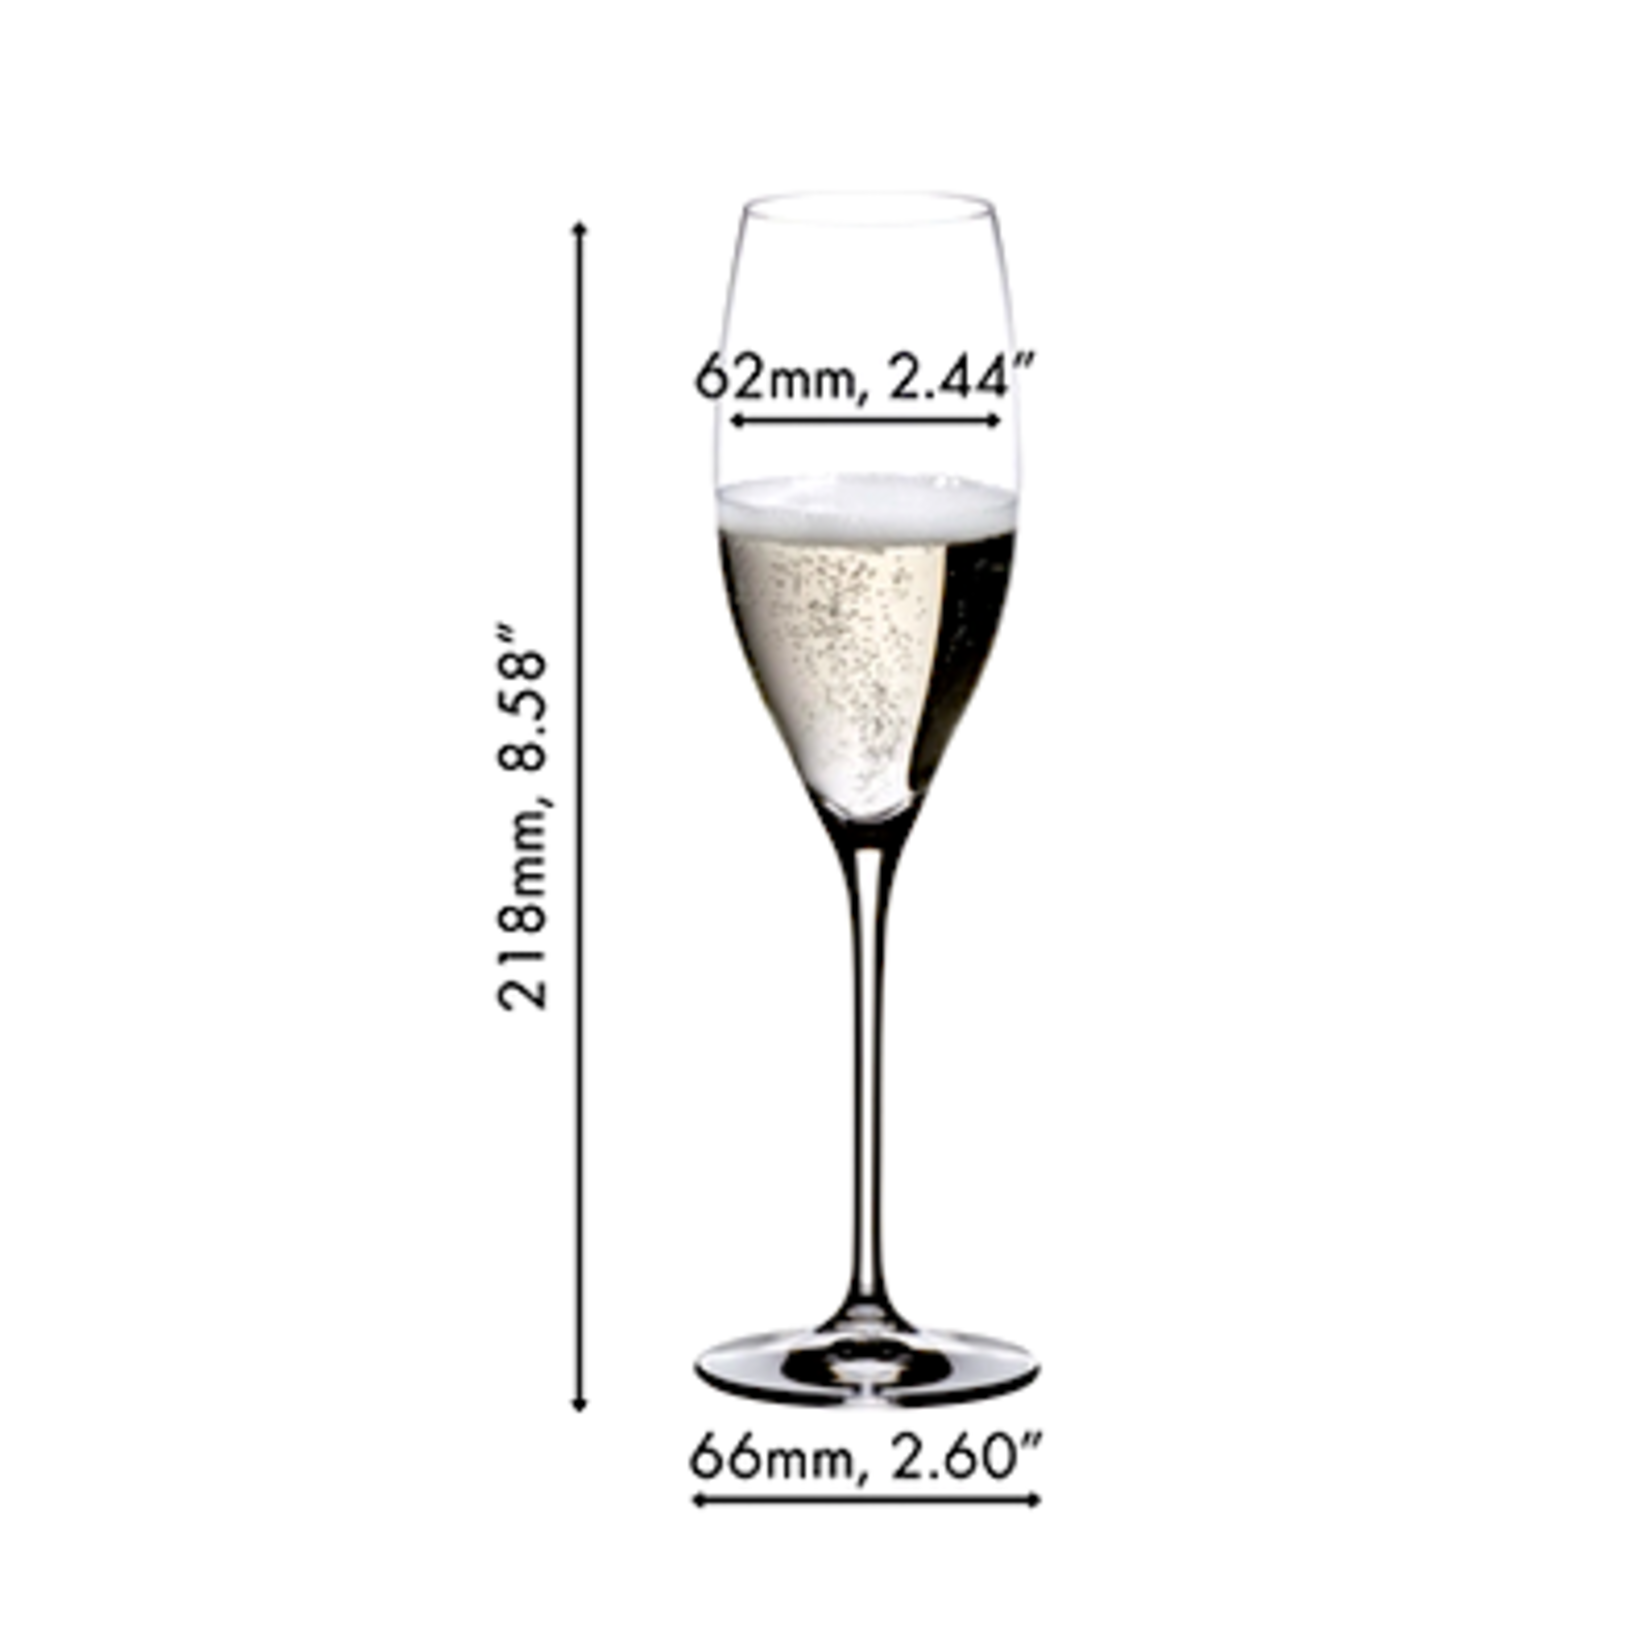 Riedel Riedel Vinum Cuvee Prestige (Champagne) Wine Glasses (Sold as a Pack of 2)